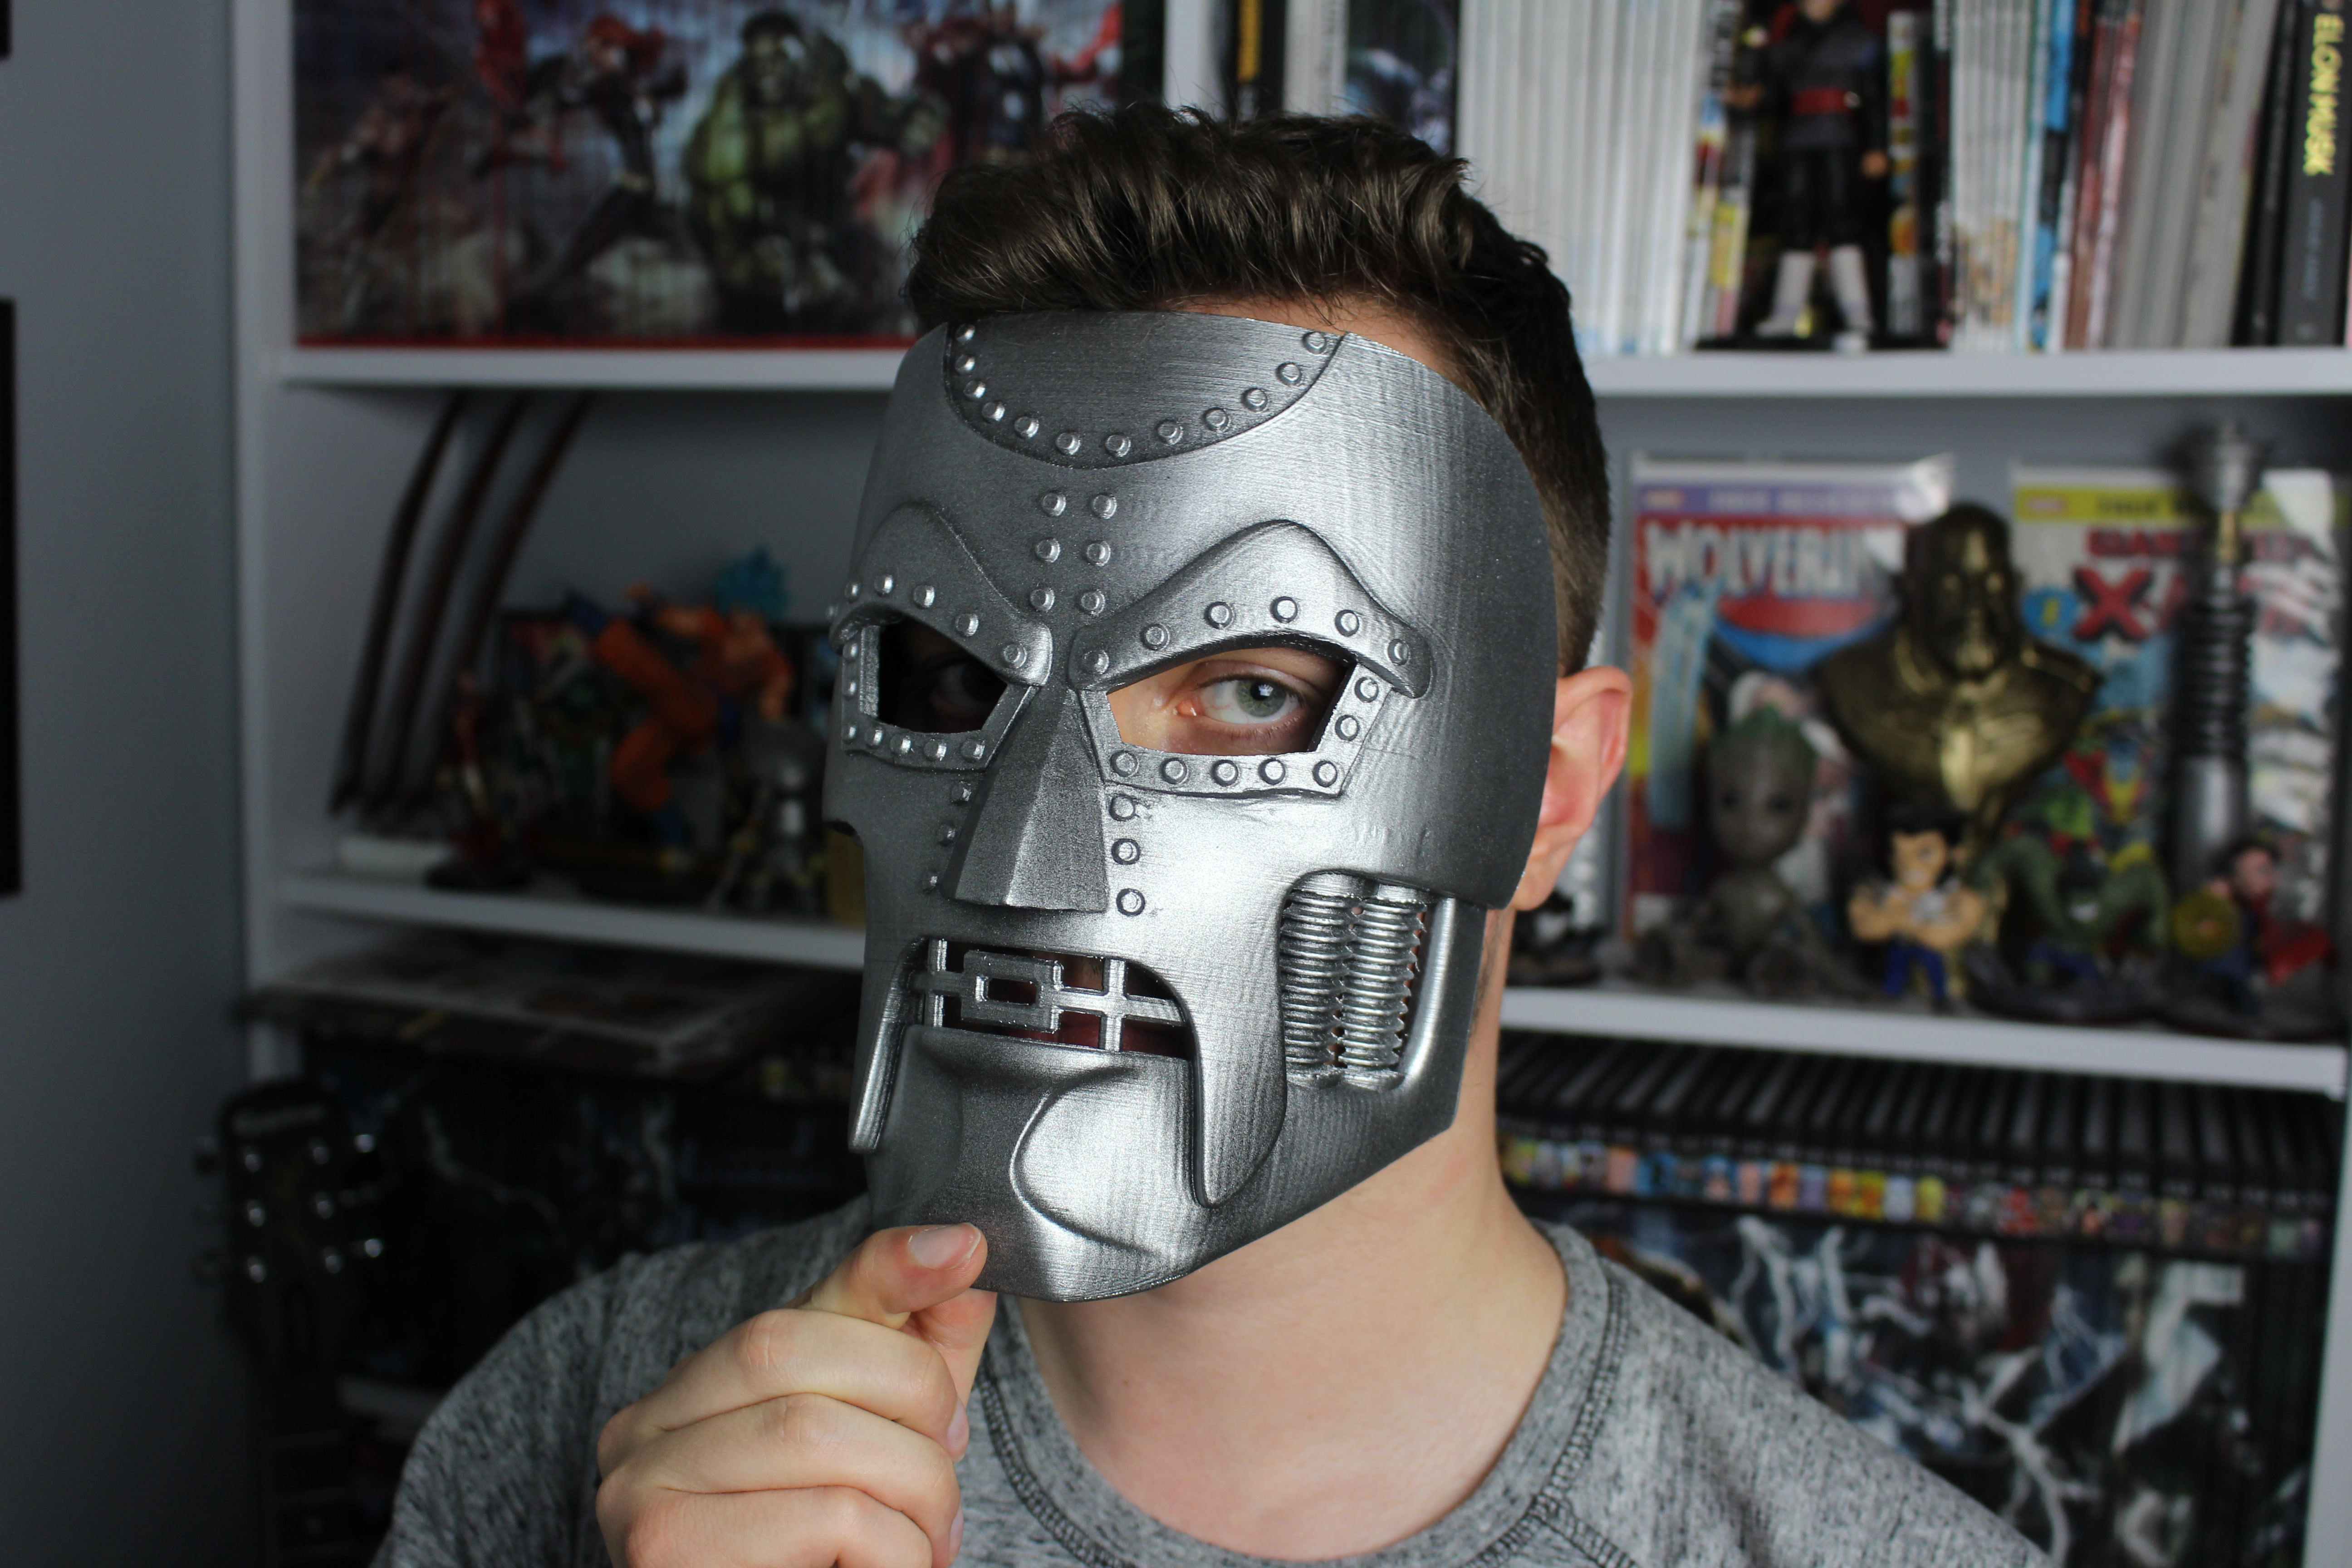 Maska Doktora Dooma | Replika